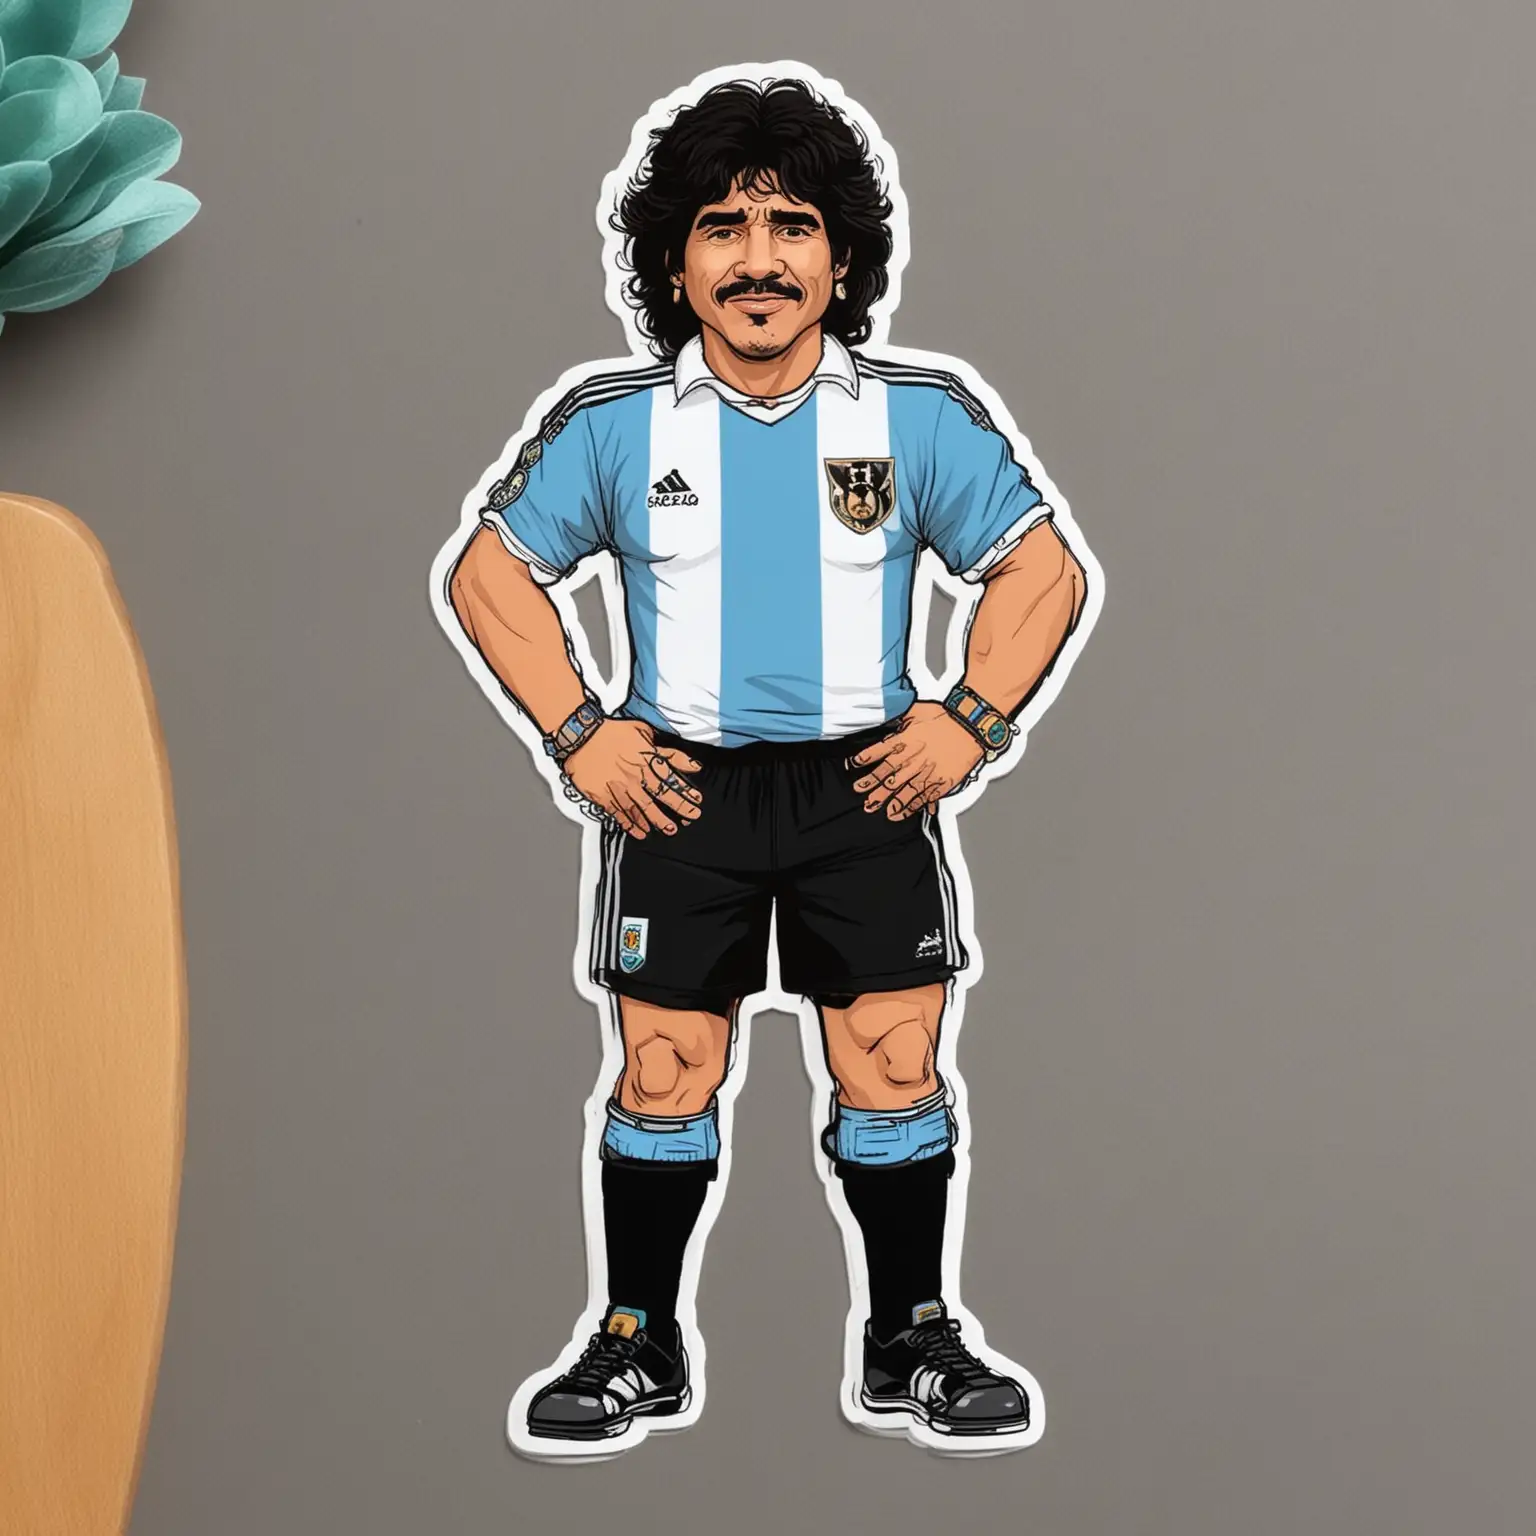 Diego Maradona FullBody Cartoon Sticker Style Illustration